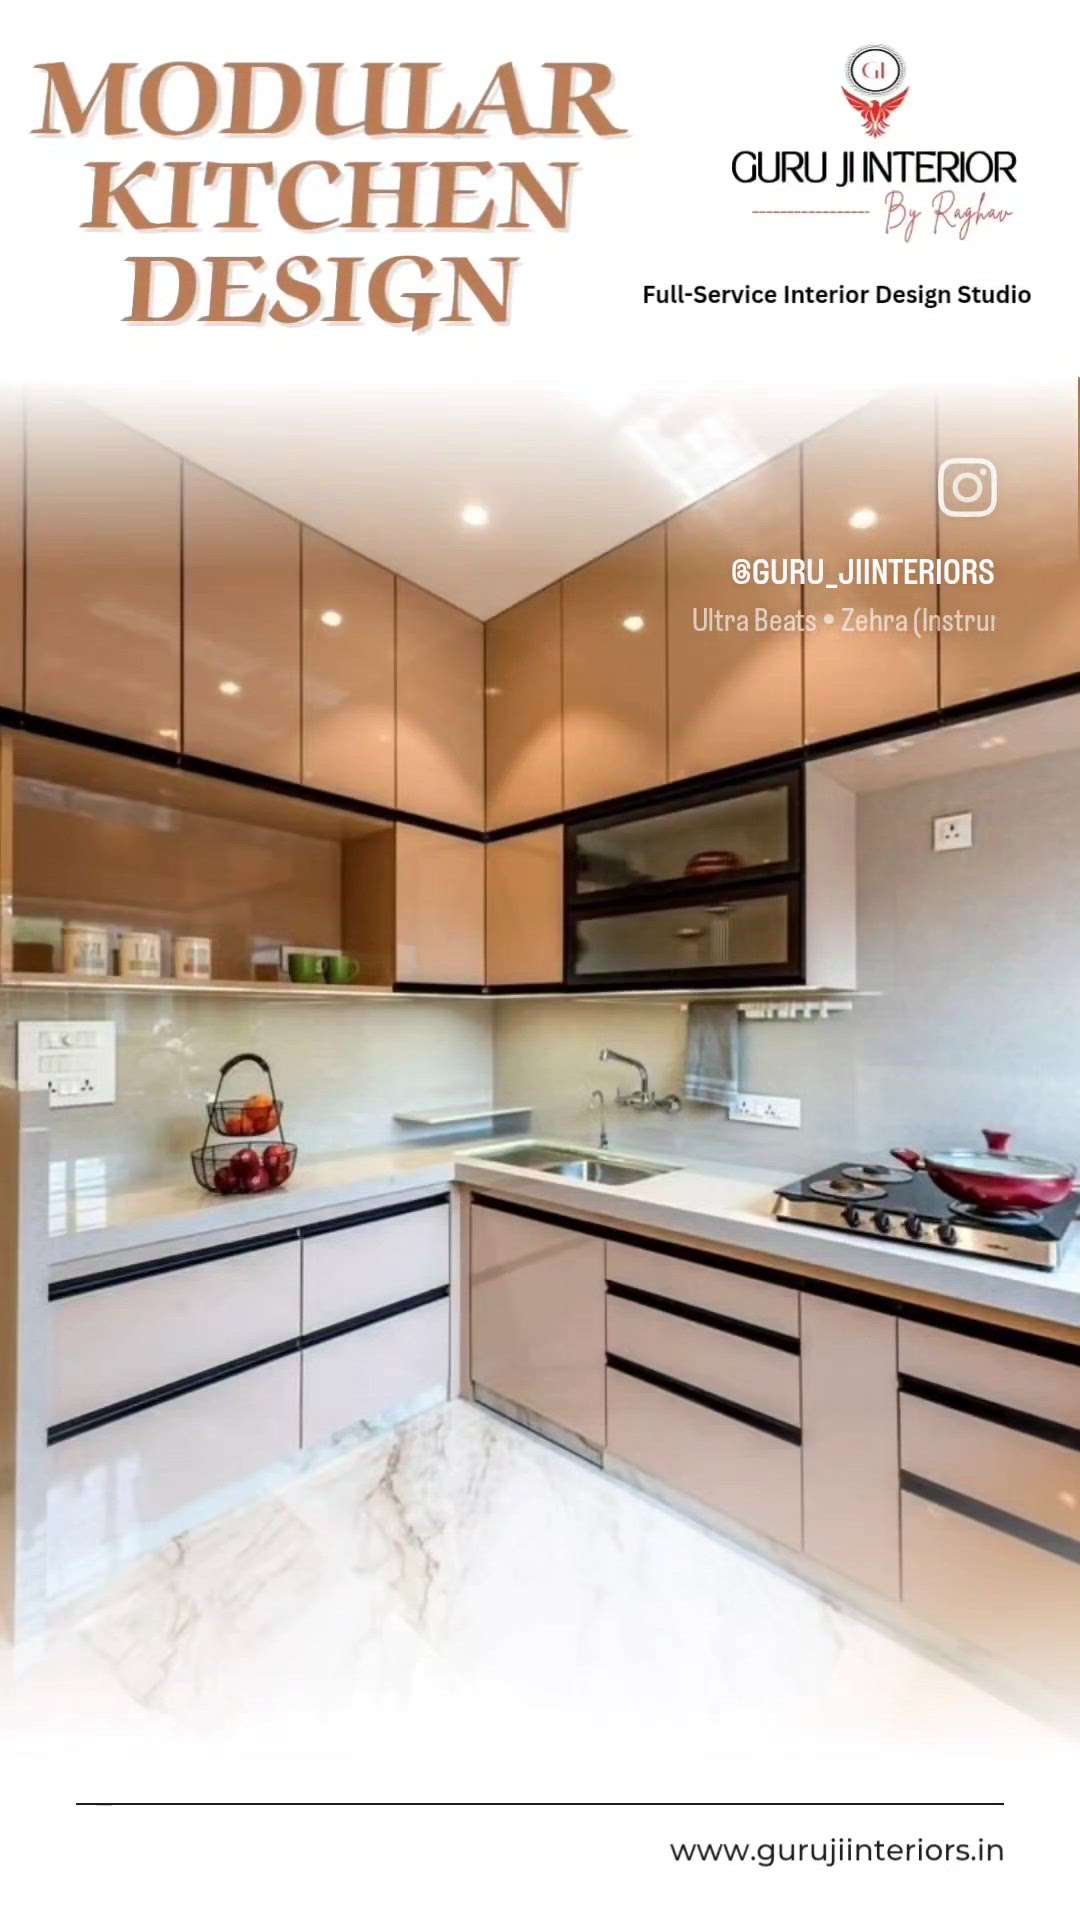 ✨ Modular kitchen Design 
 #PerfectInterior 
Get Lowest price and best quality home interior 
Guru ji interior
By - Raghav 
Call - 9870533947, 7303111335
.
 #kitchendecor #interiordesign#modularkitchen
#Moderninterior